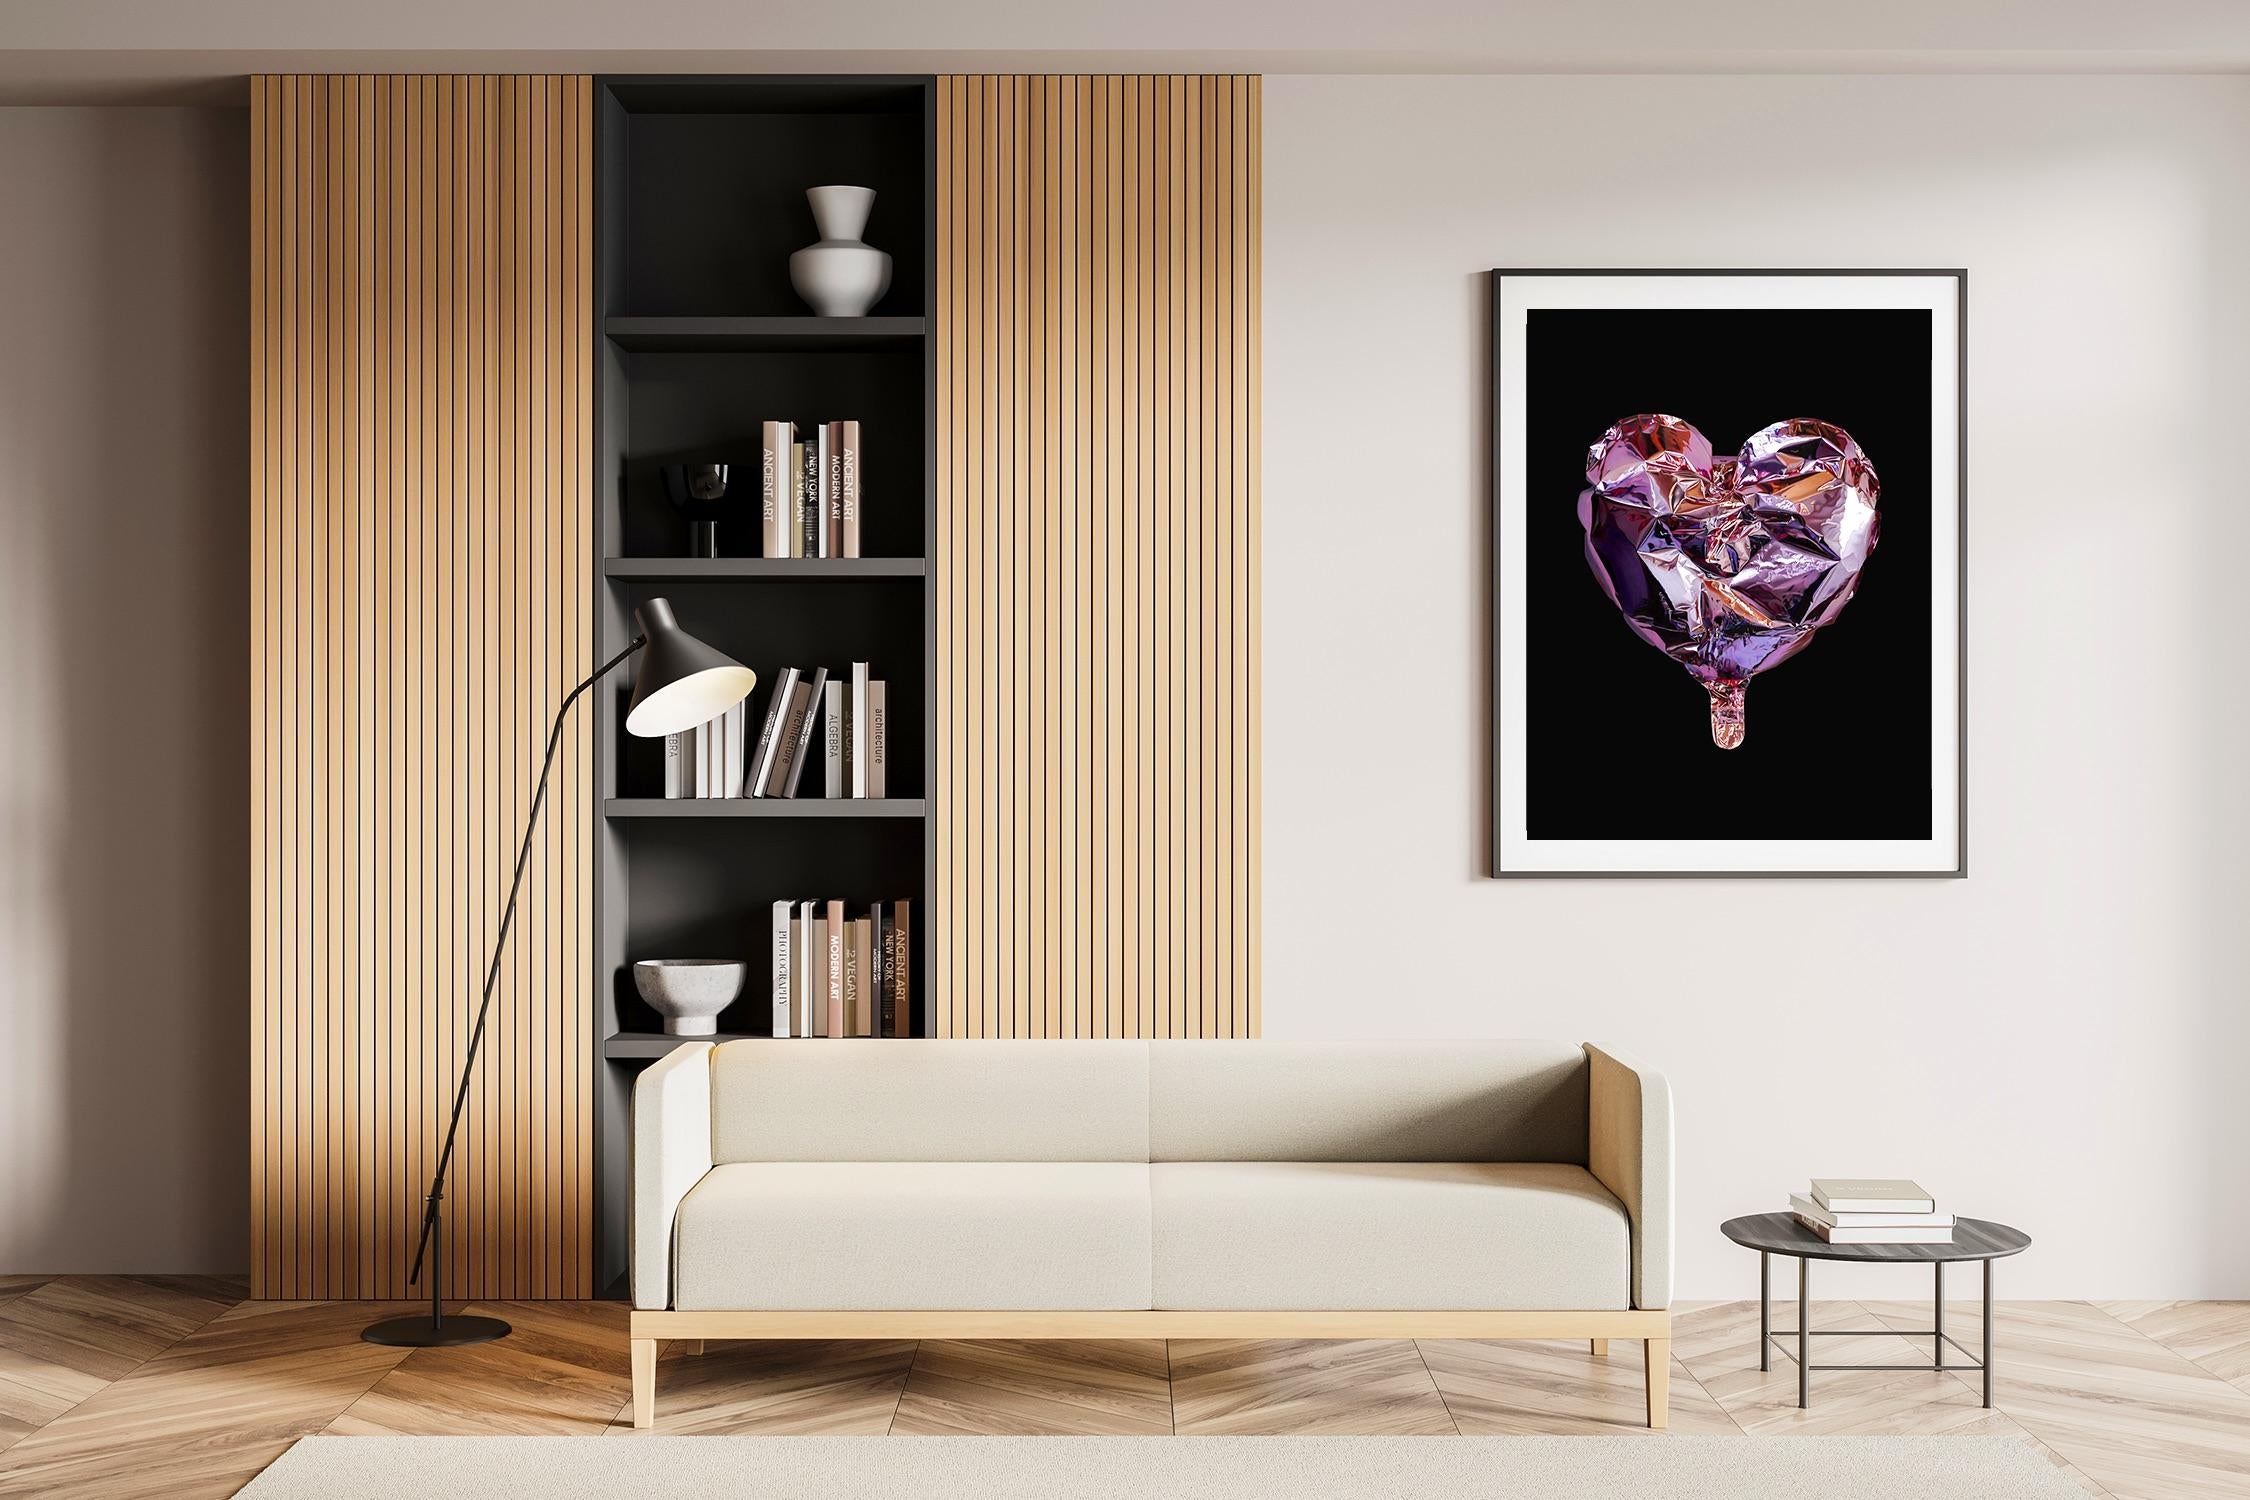 Rose Tinted , still life, heart balloon, wall art - Print by Jack Verheag